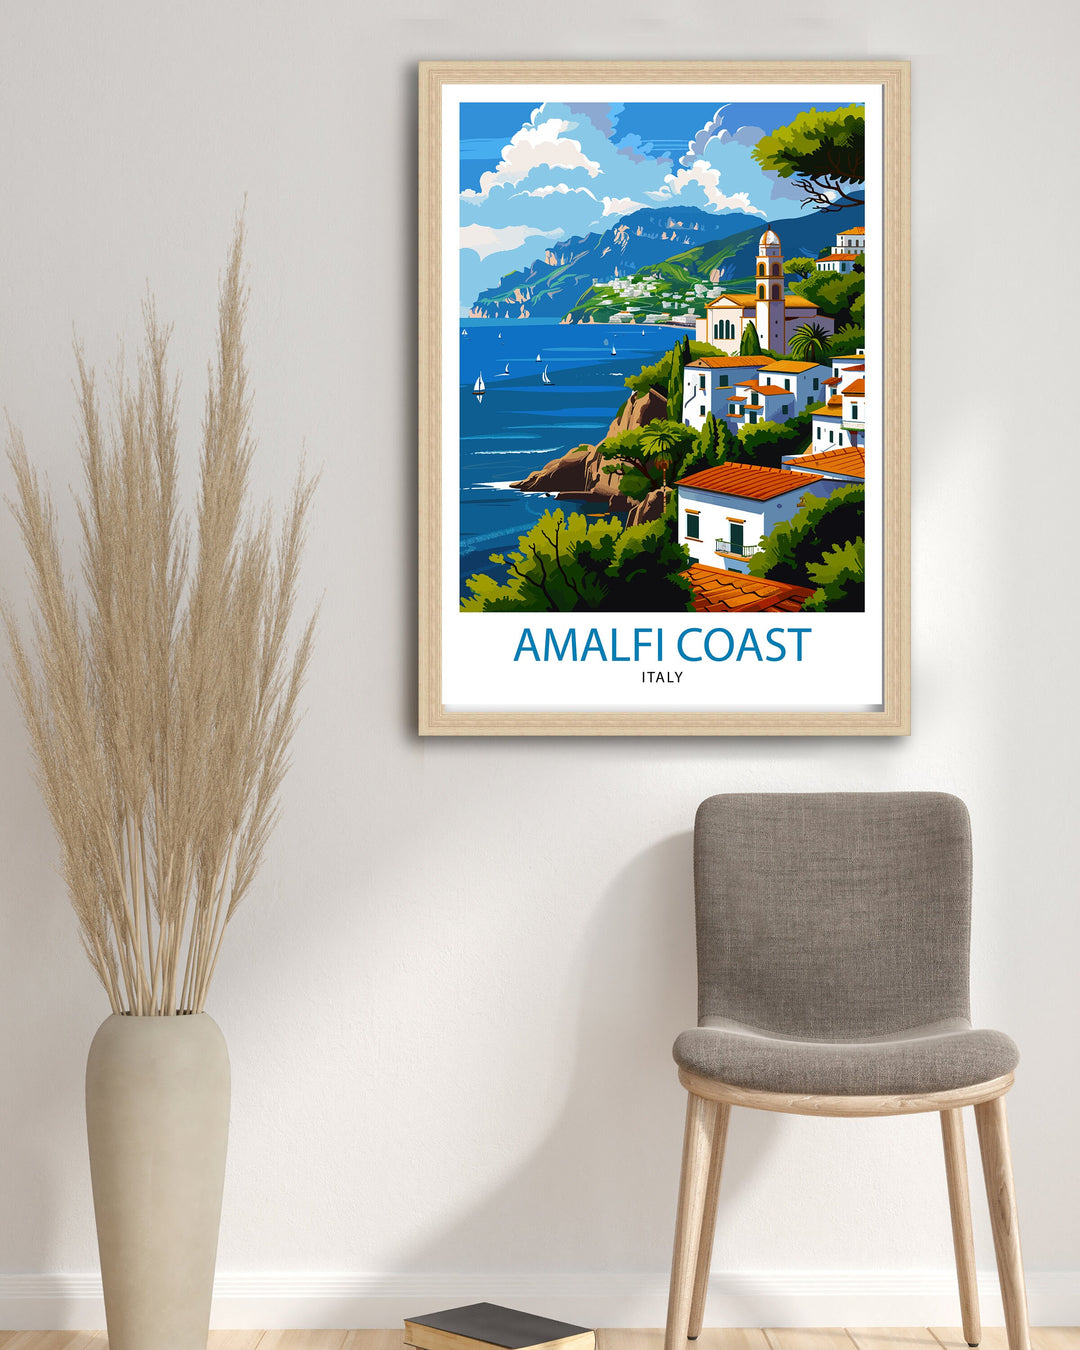 Amalfi Coast Italy Travel Print Amalfi Coast Wall Decor Amalfi Coast Poster Italy Travel Prints Amalfi Coast Art Print Amalfi Coast